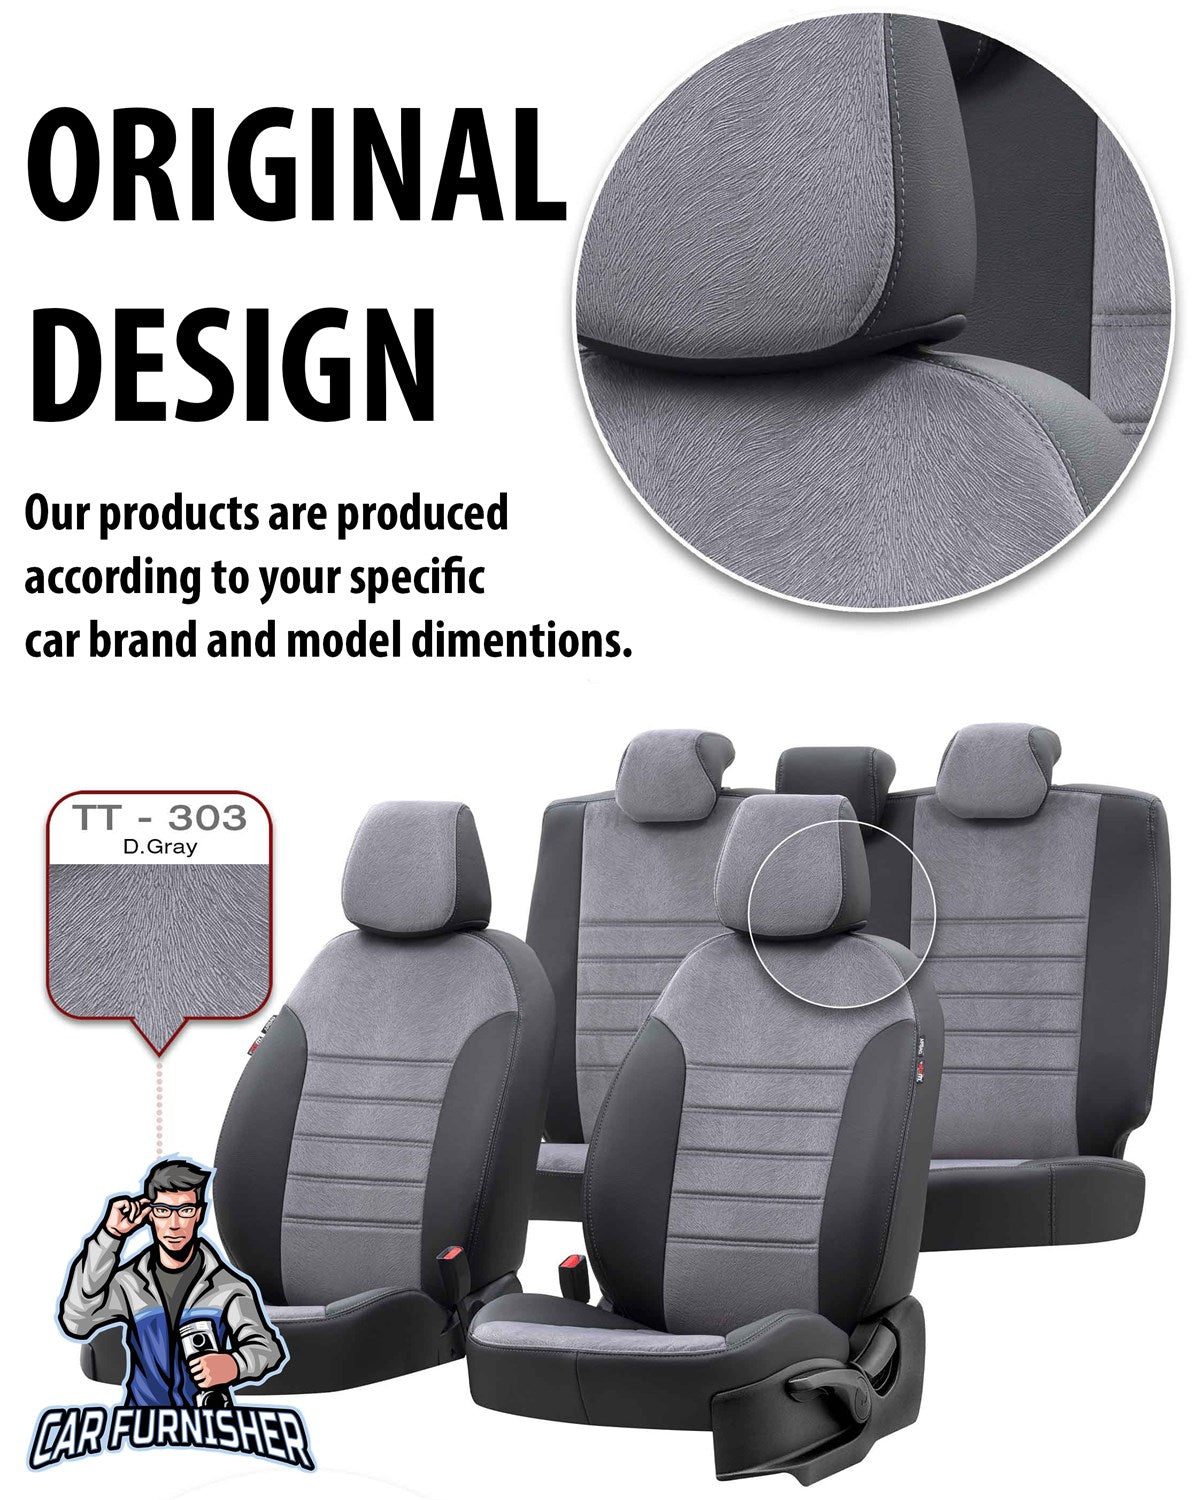 Peugeot Bipper Car Seat Covers 2007-2023 London Design Black Leather & Fabric